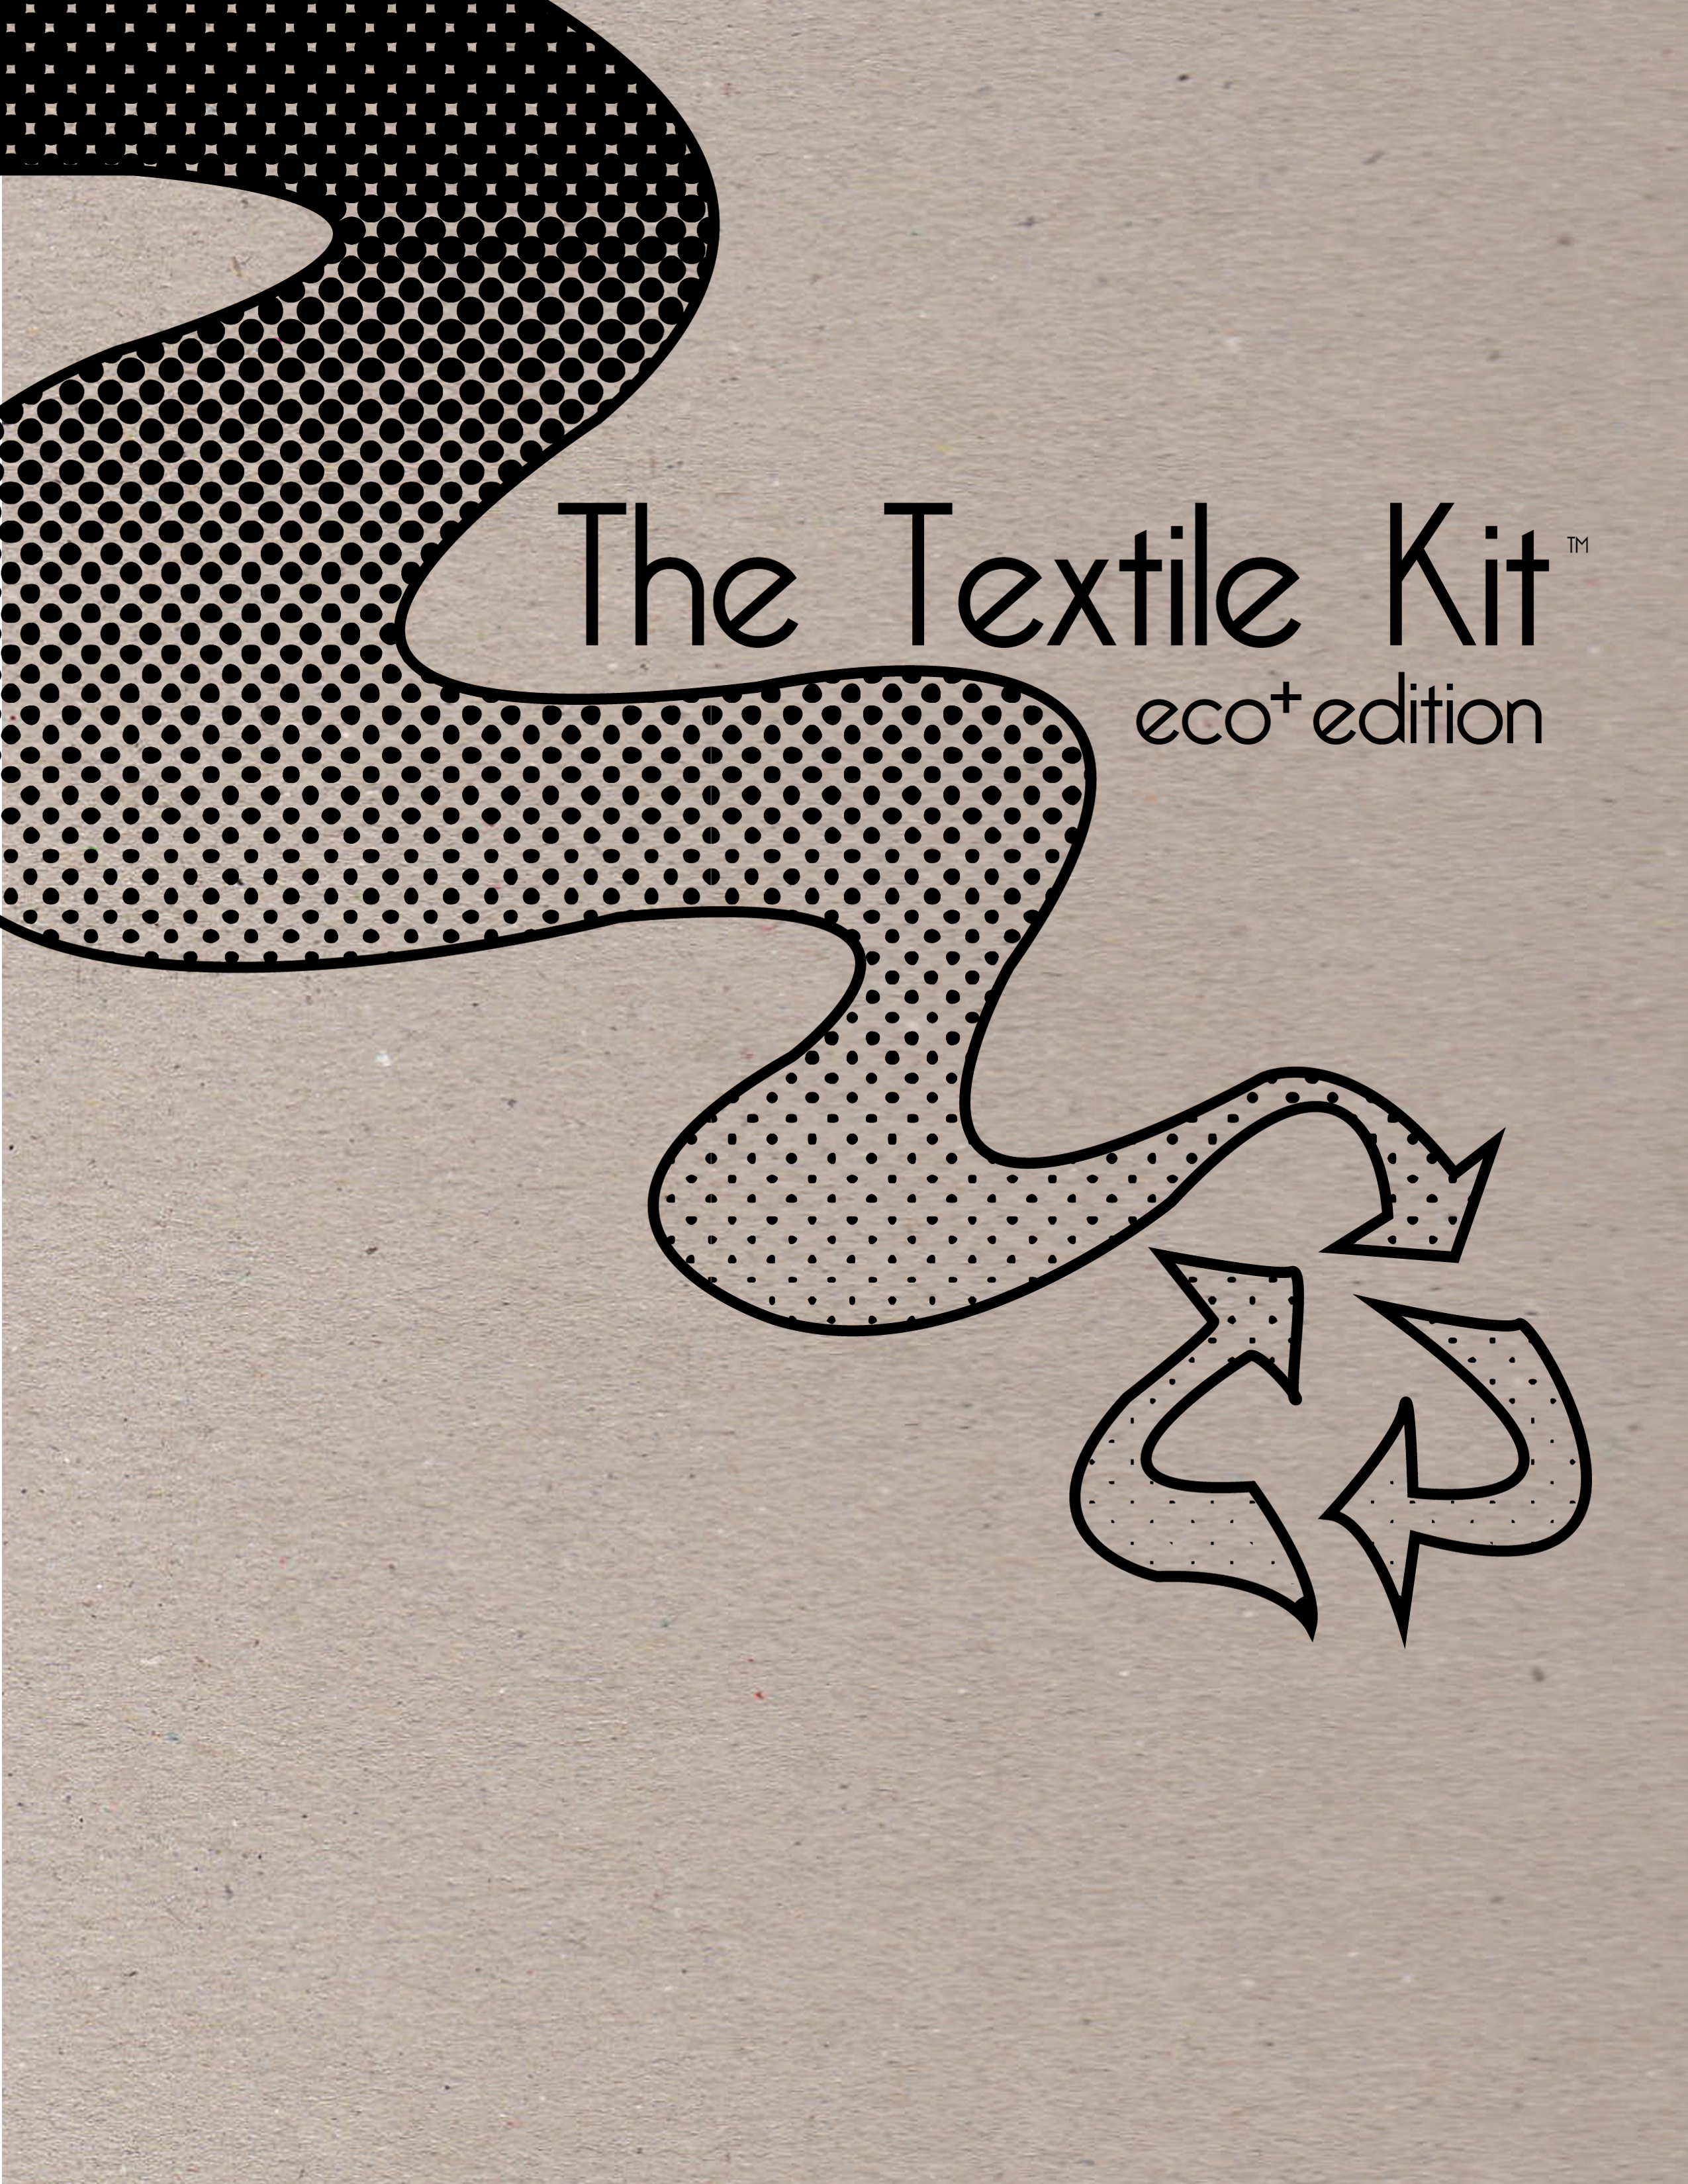 The Texitile Kit